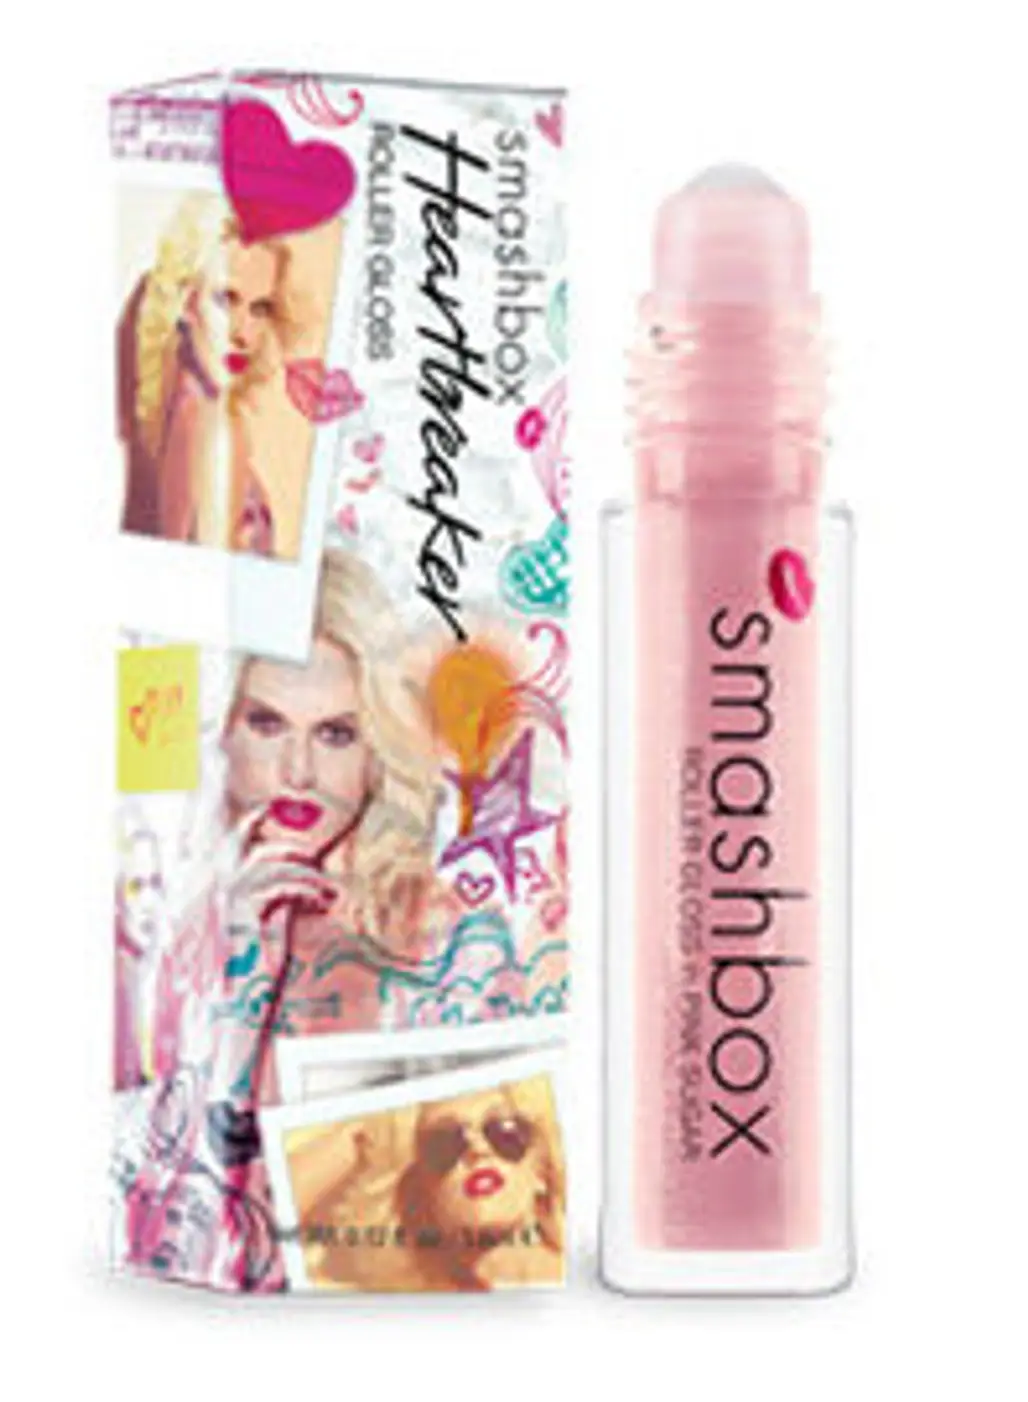 Smashbox Heartbreaker Rollerball Lip Gloss “Pink Sugar”